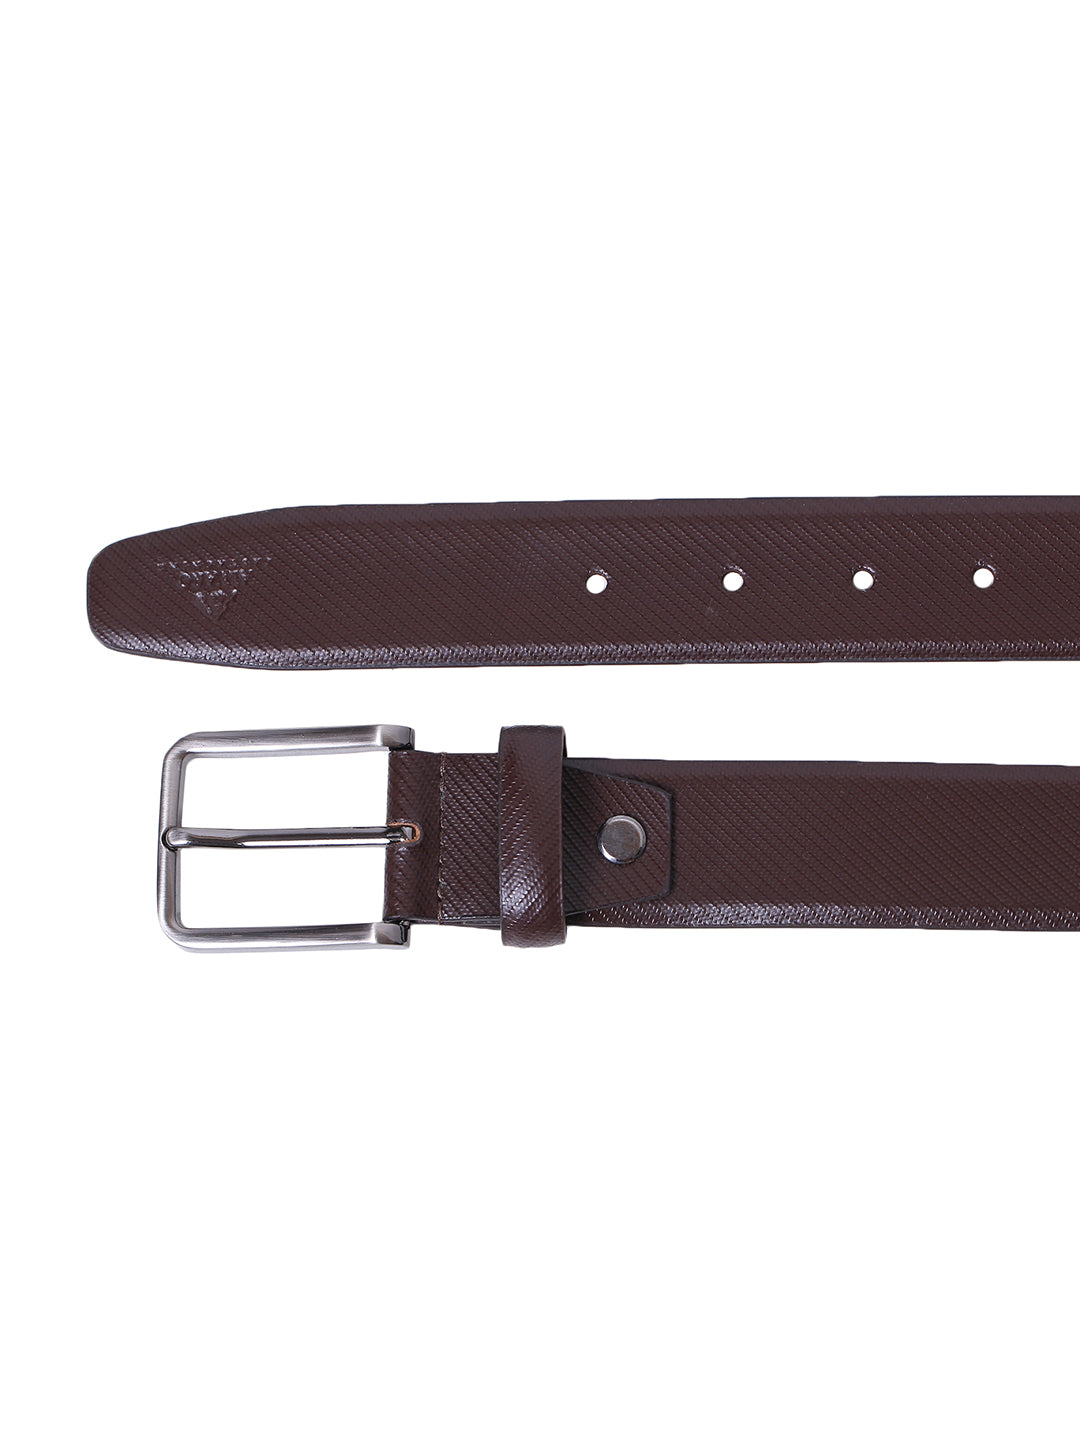 Alvaro Castagnino Men's Brown Color Leather Belt